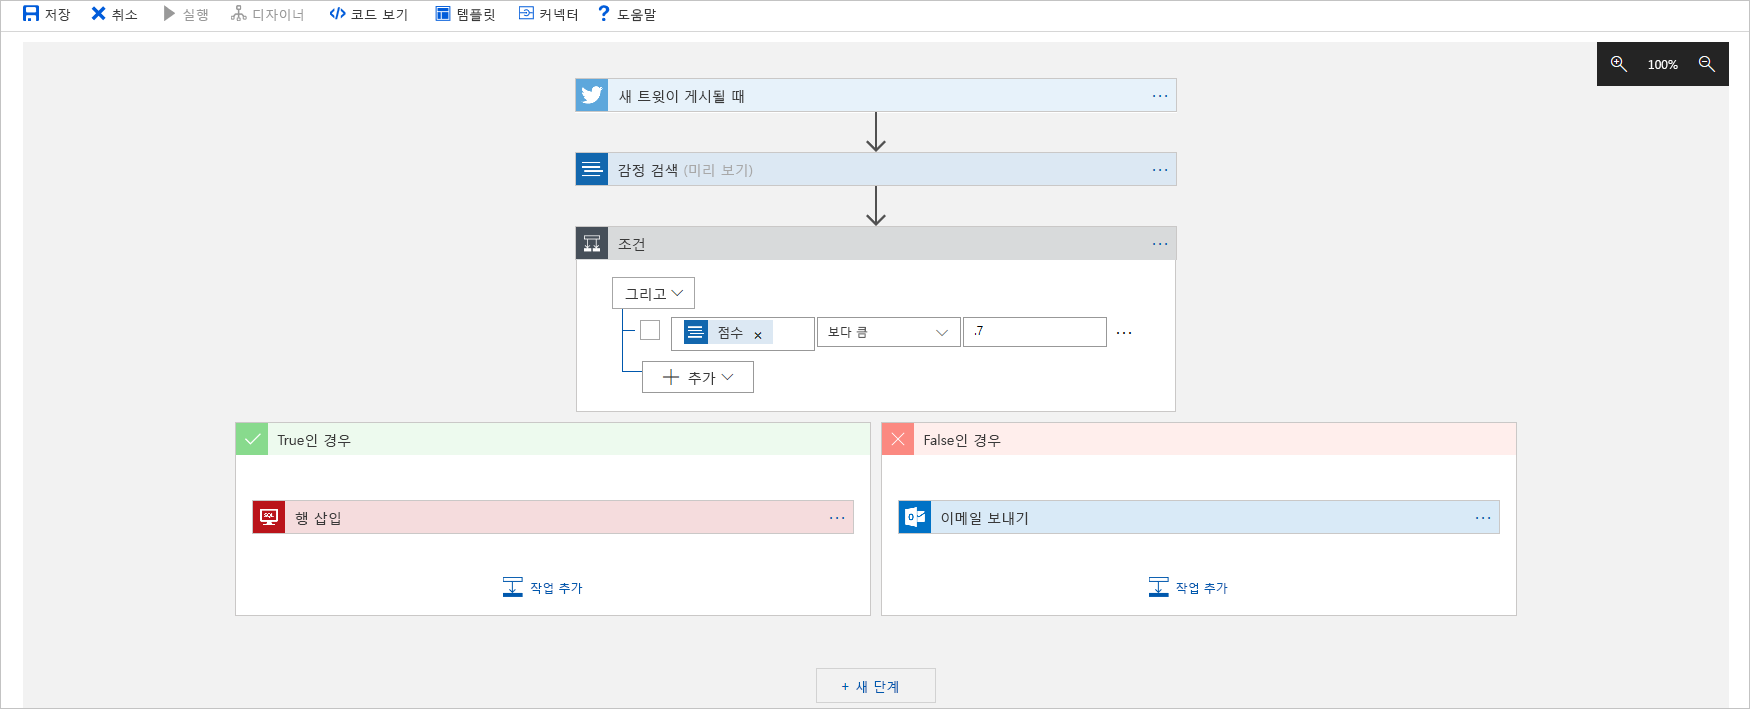 Screenshot shows the social media monitoring app in the workflow designer.